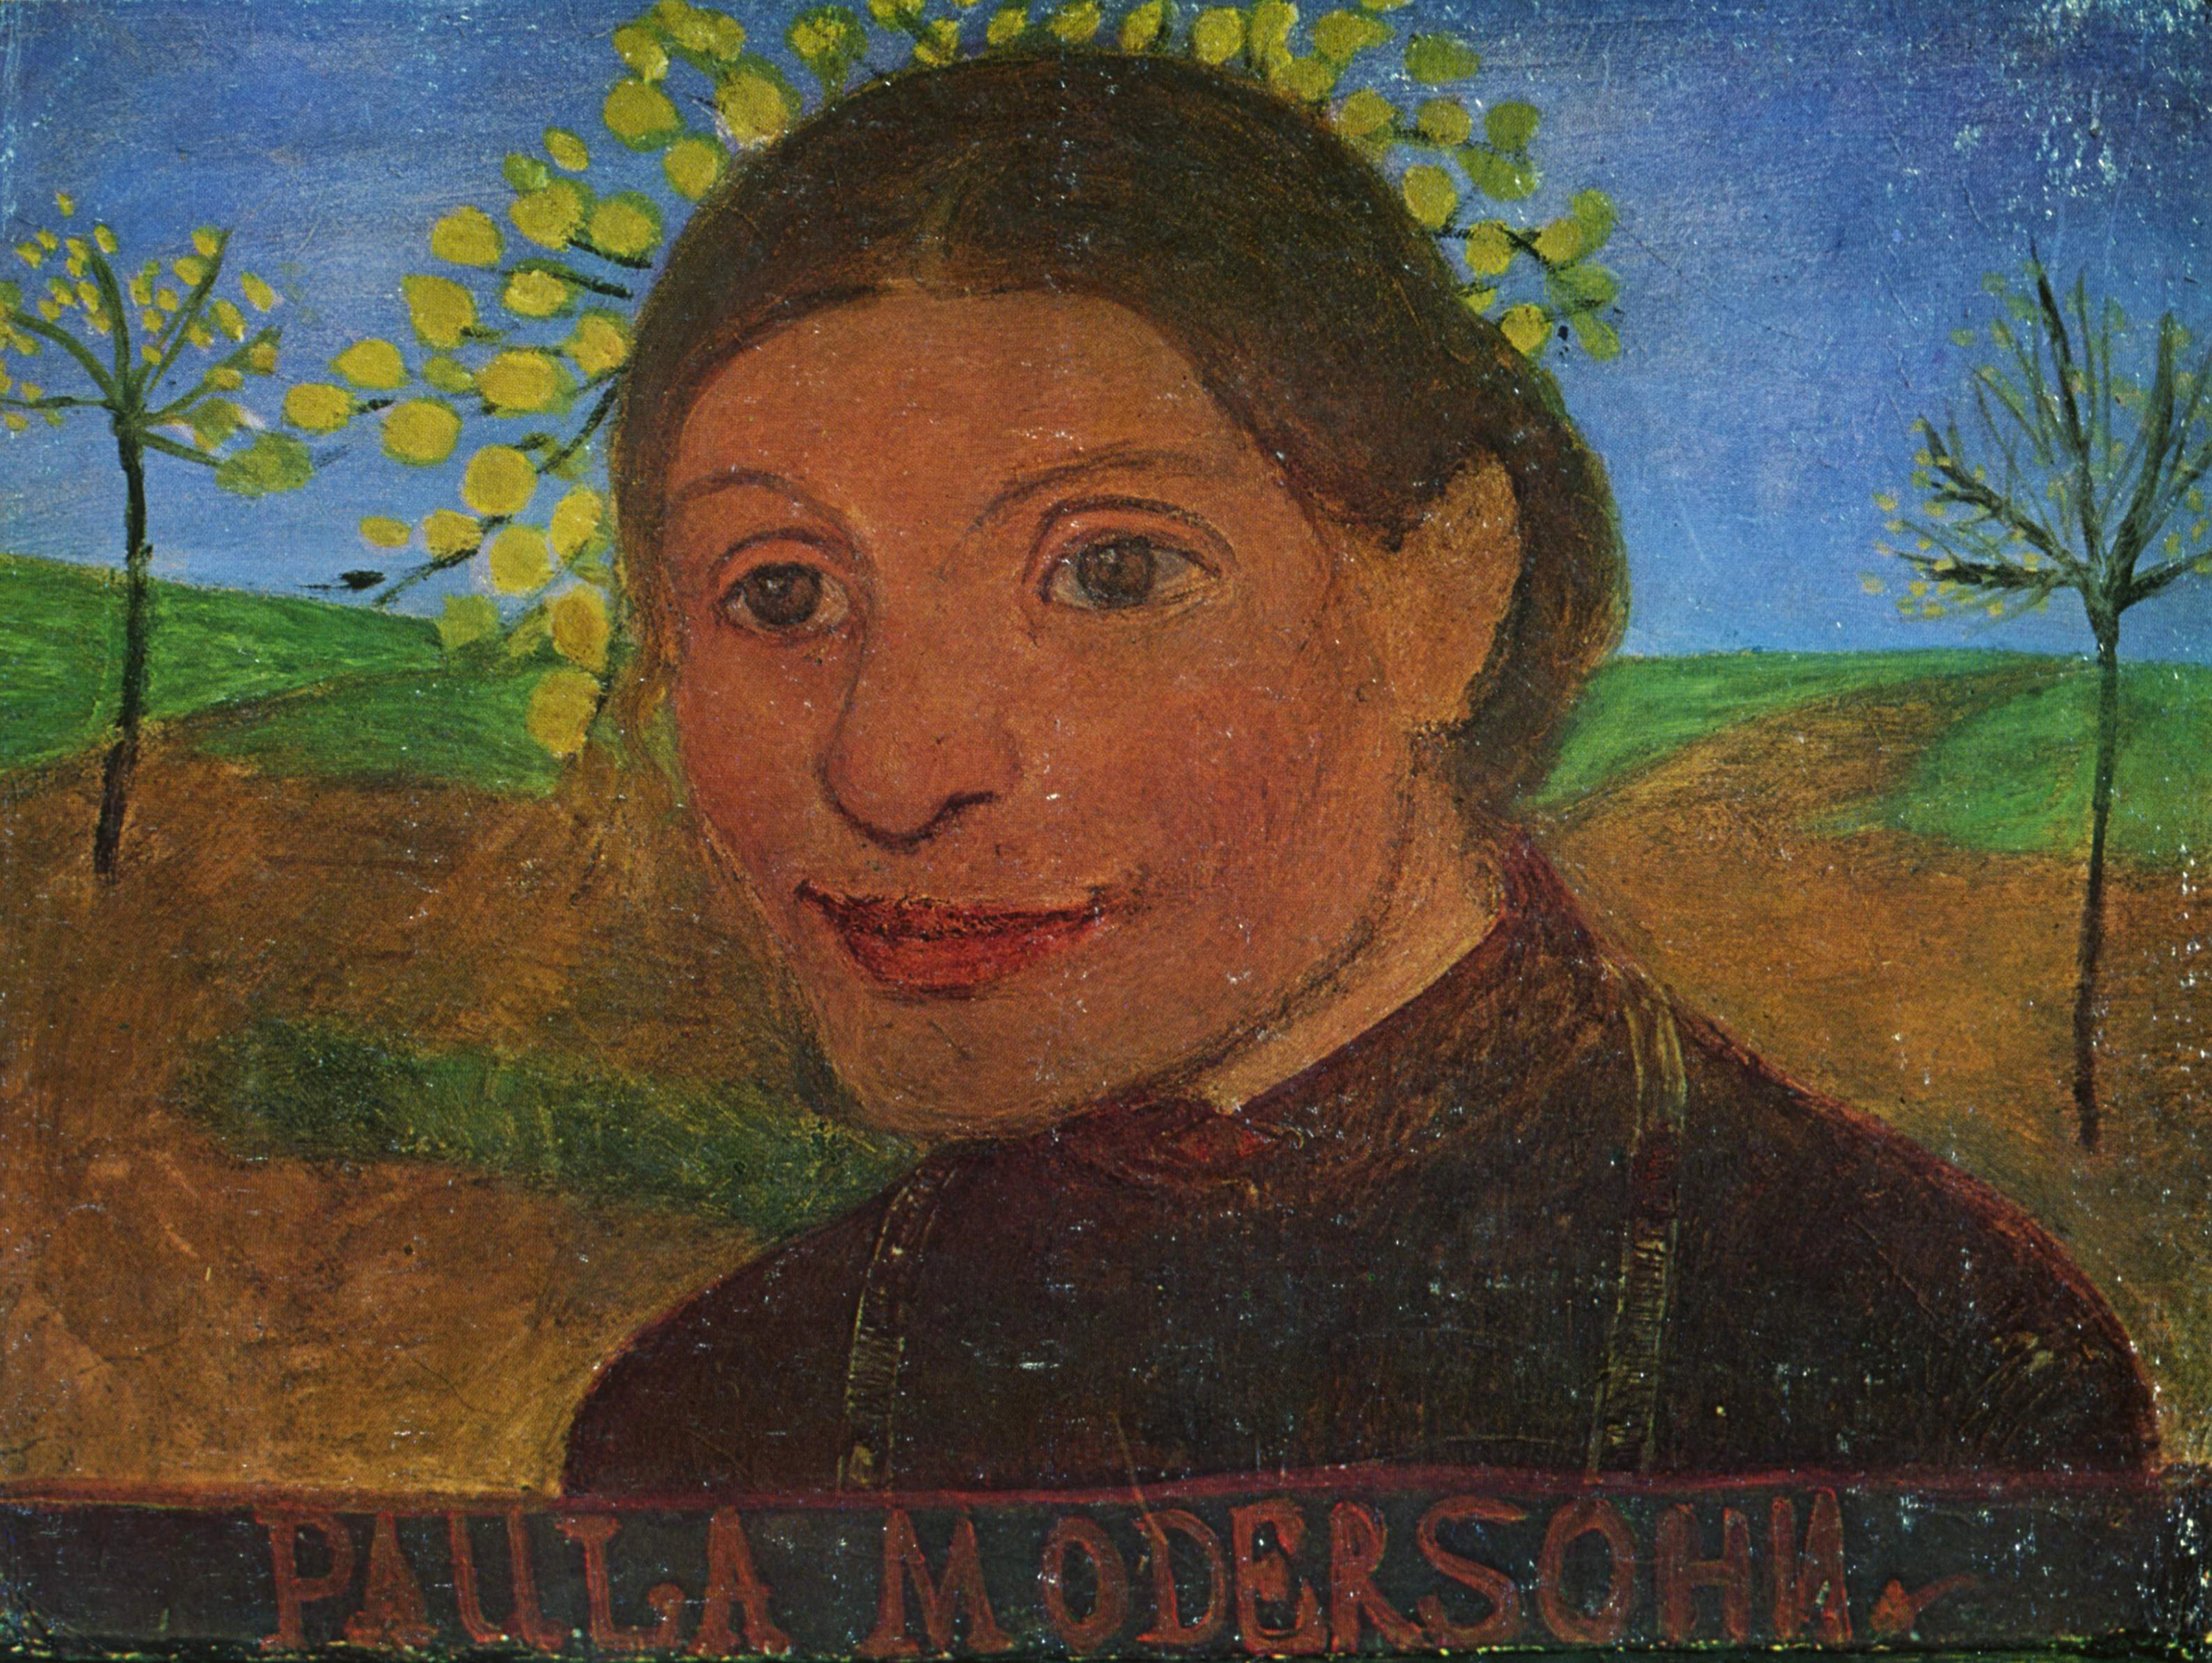 Self portrait in front of flowering trees, Paula Modersohn-Becker